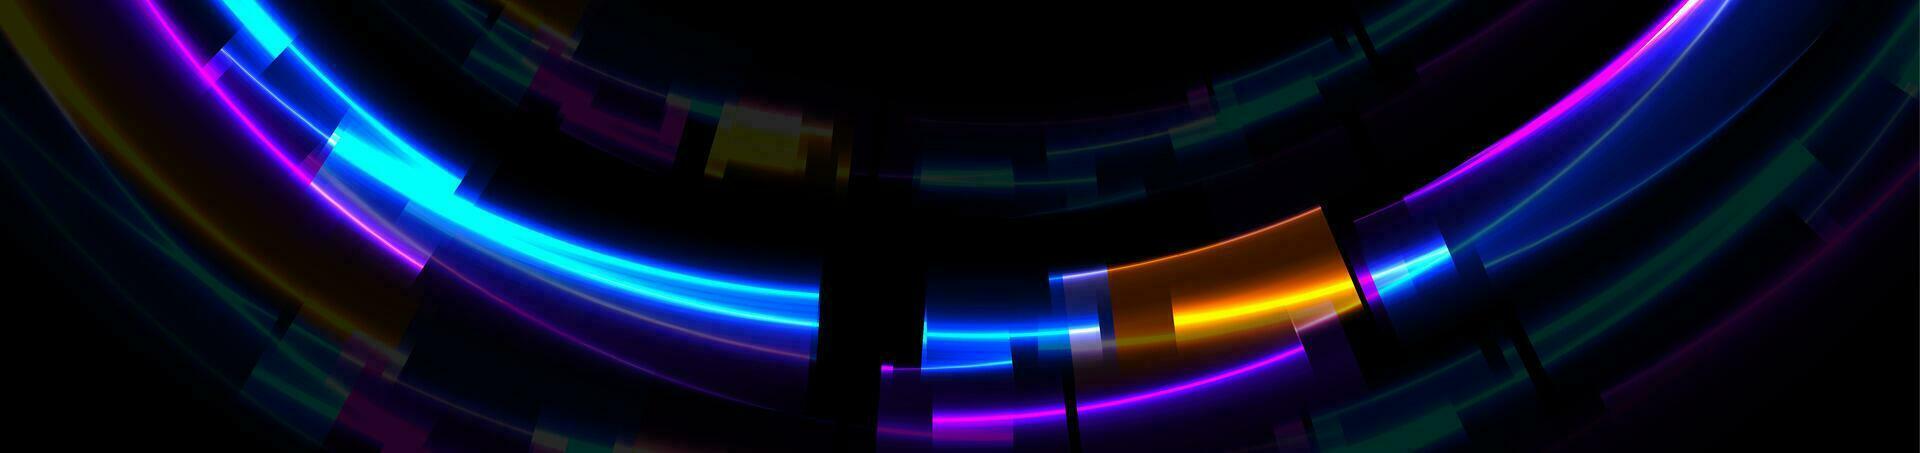 abstract tech gloeiend neon lijnen vector banier met glitch effect